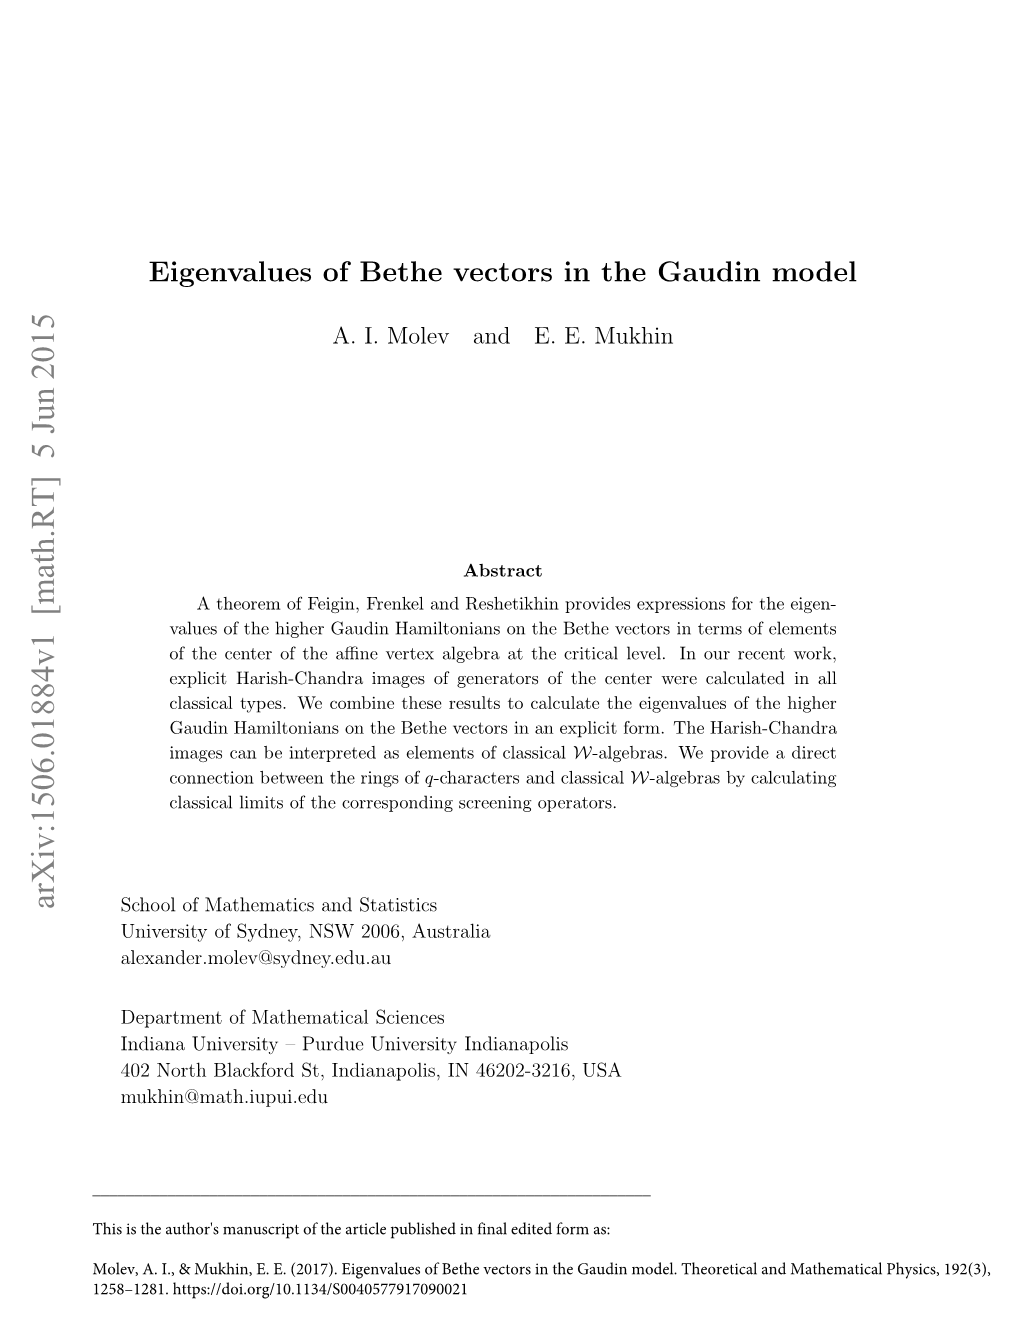 Eigenvalues of Bethe Vectors in the Gaudin Model